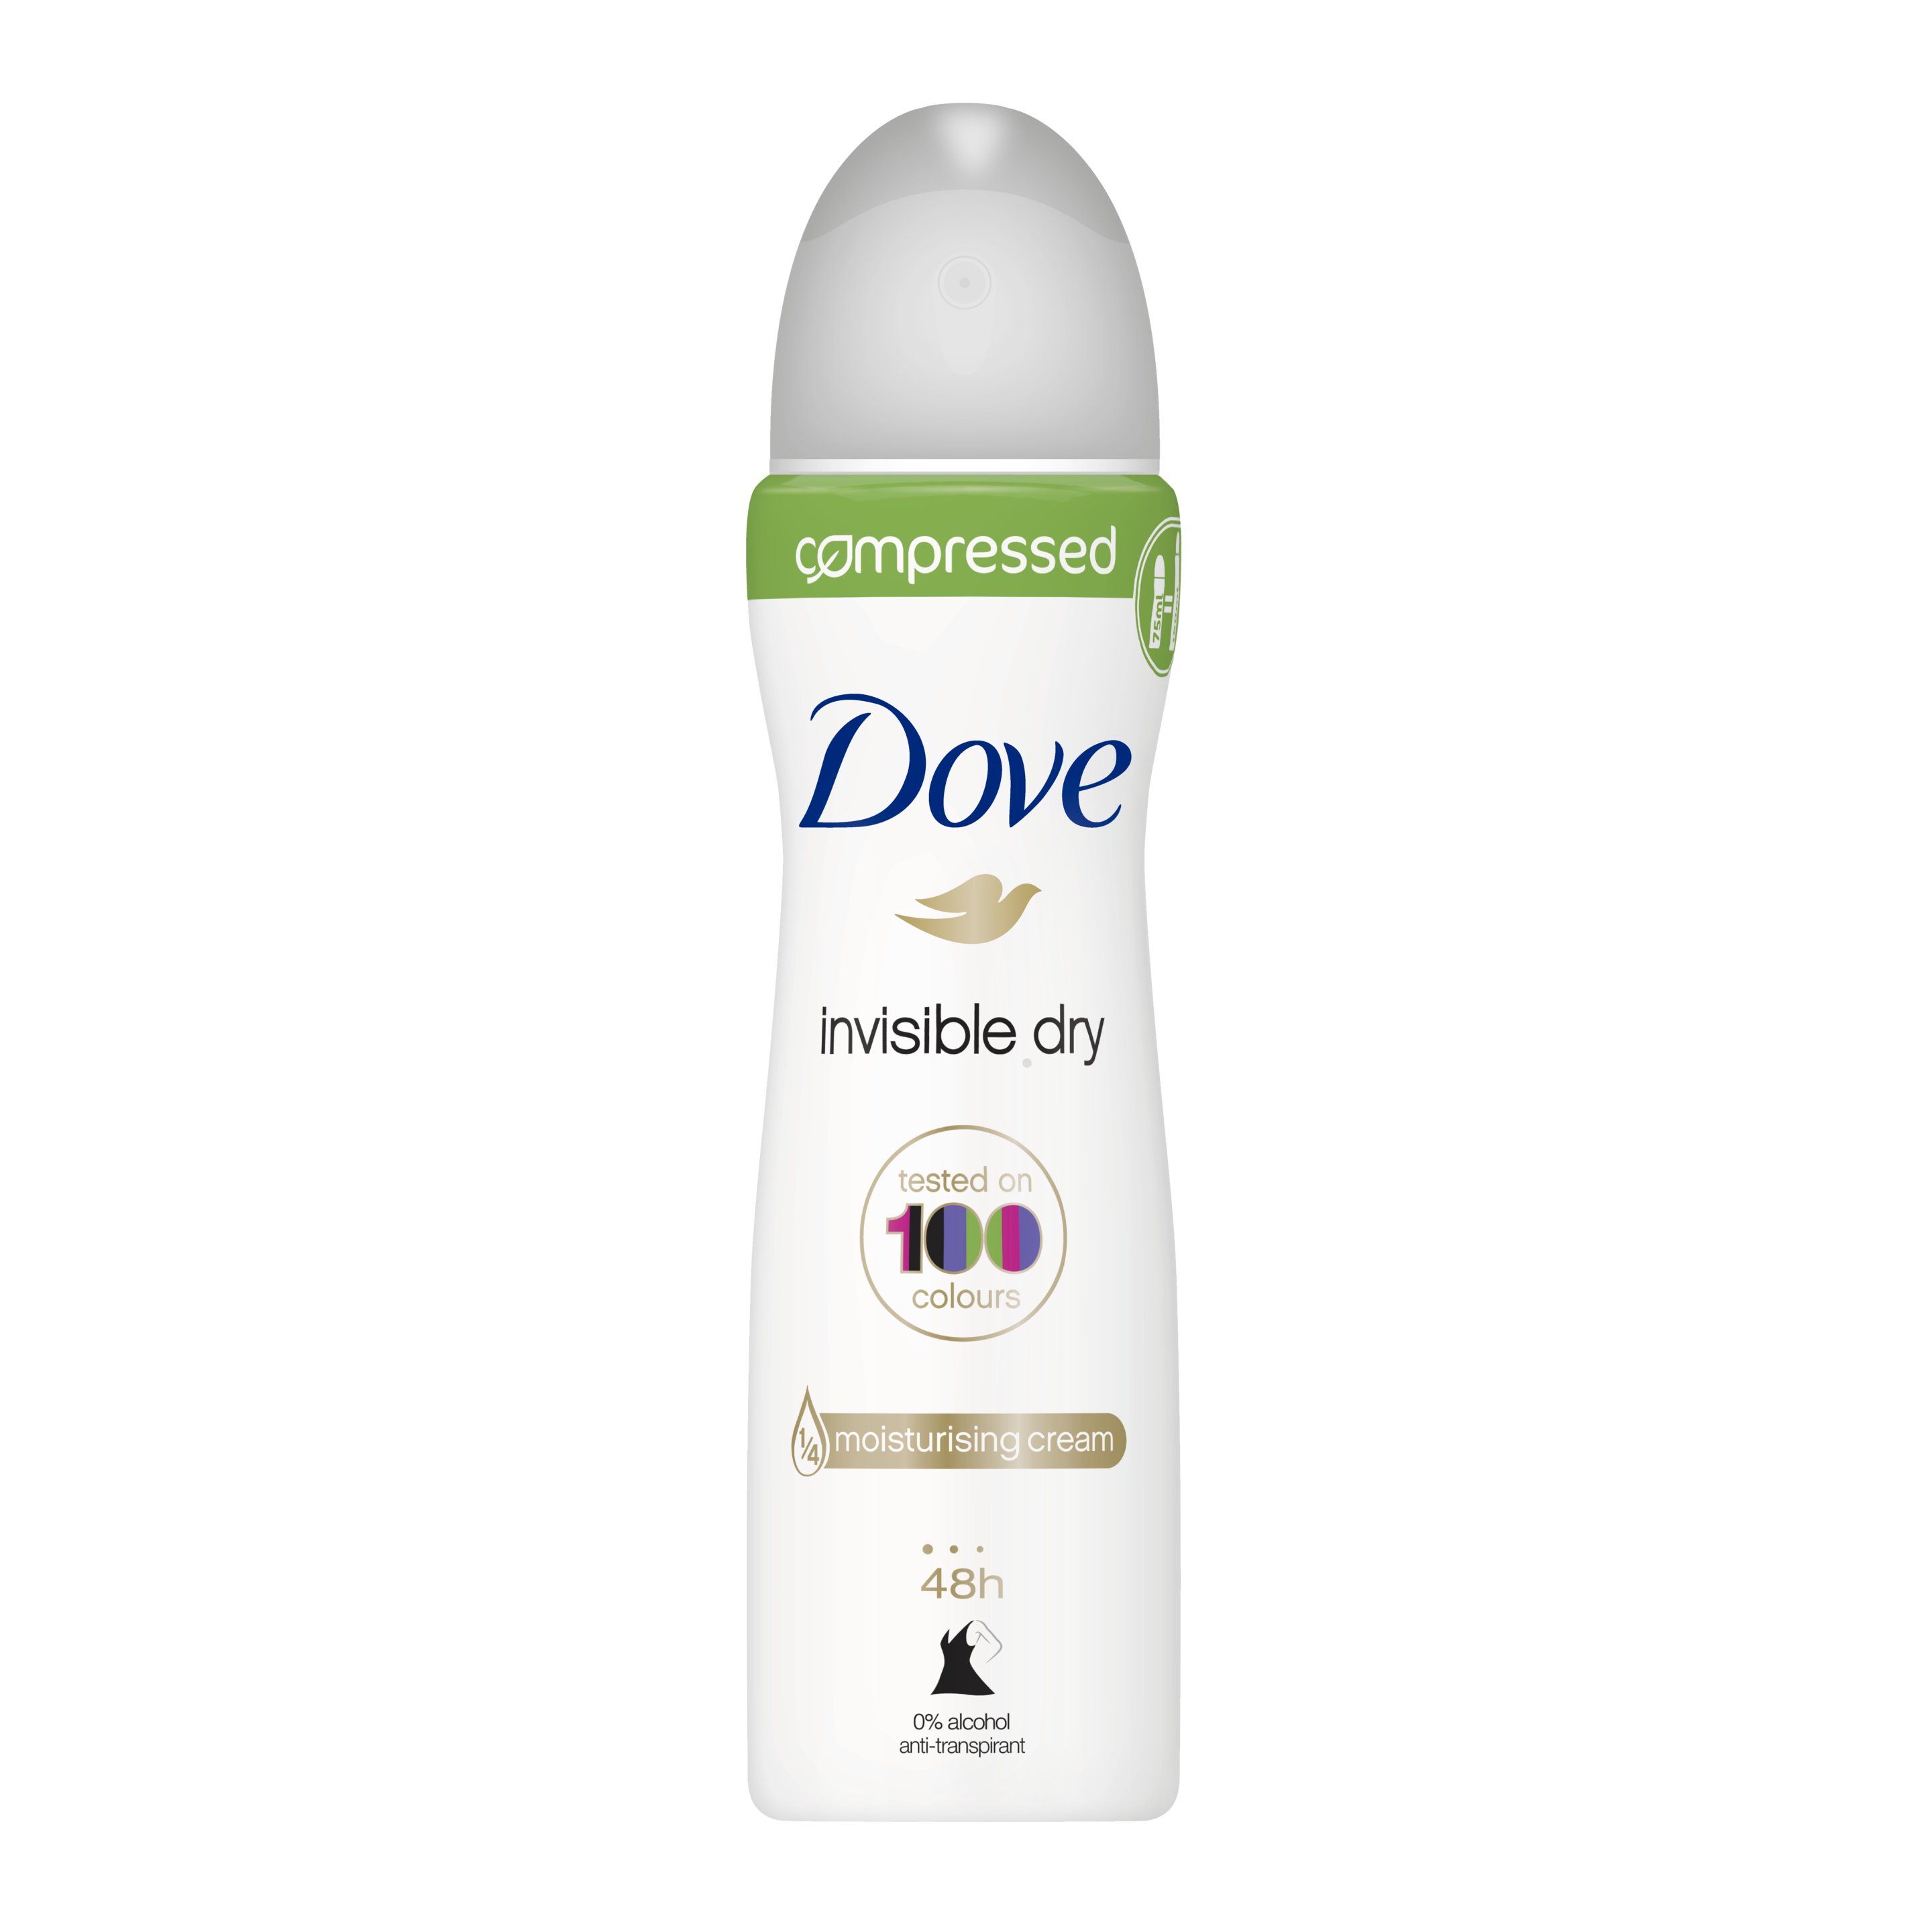 Dove Invisible Dry compressed spray déodorant 75ml